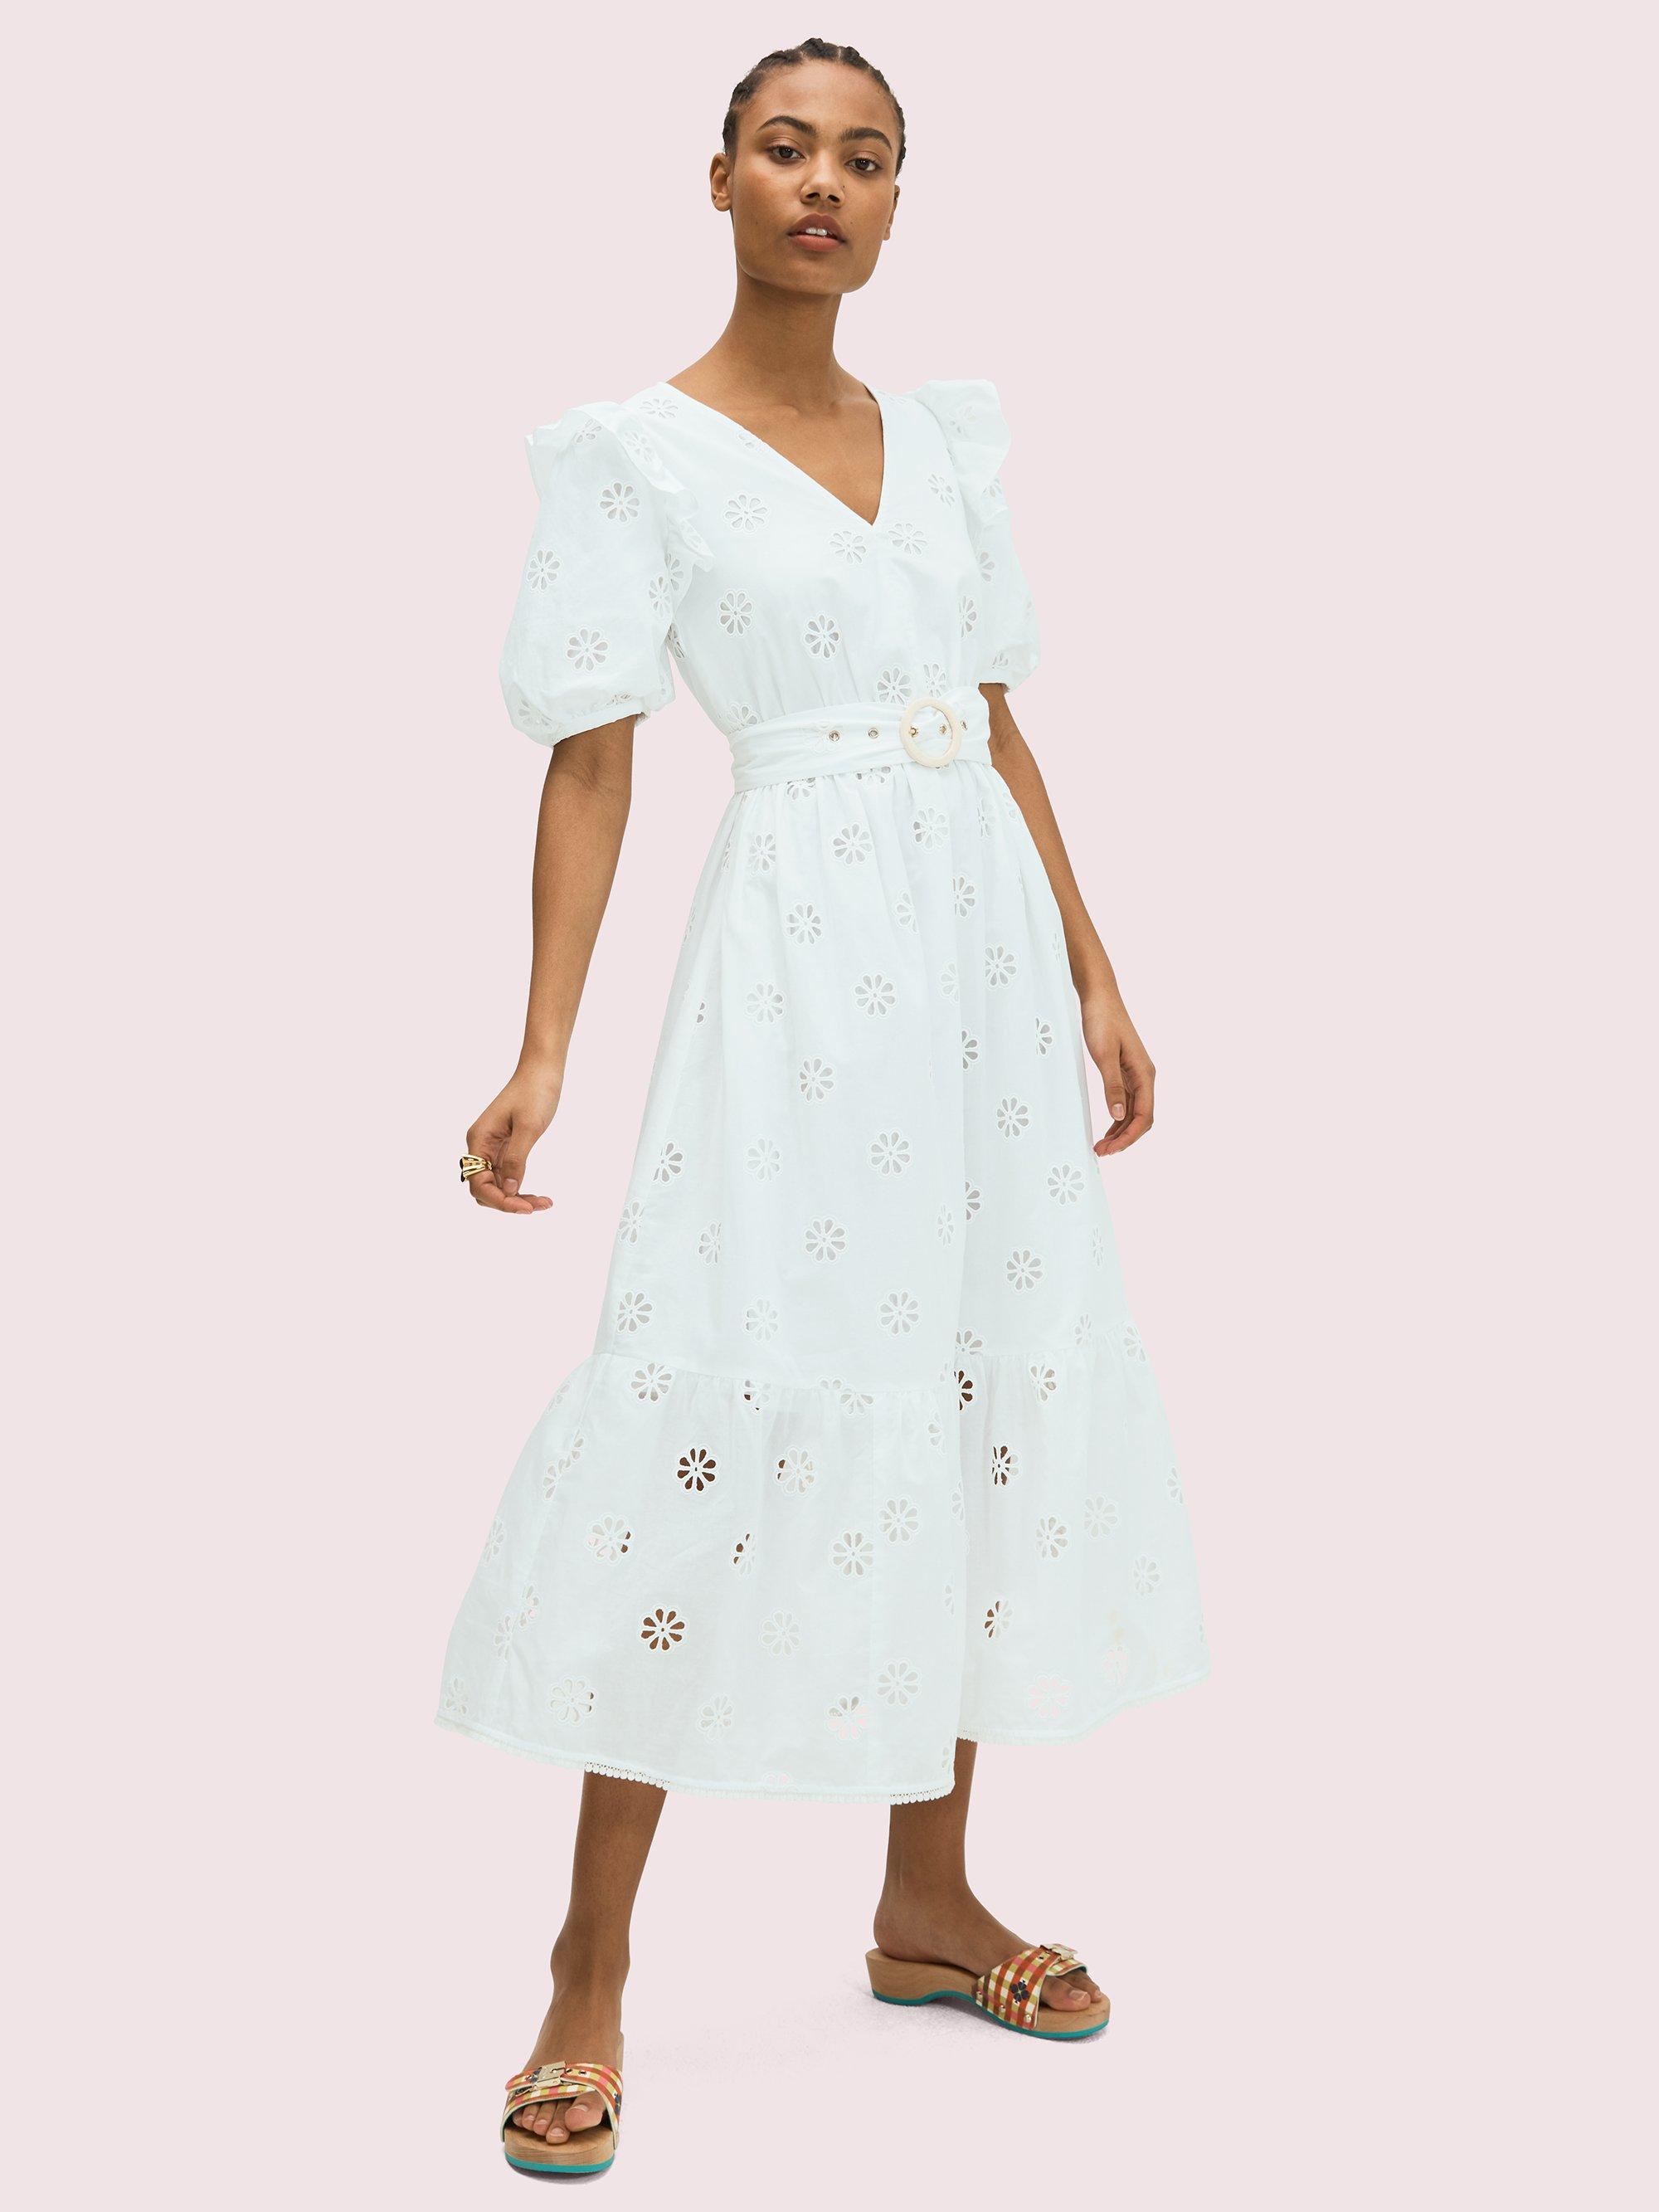 Kate Spade Cotton Spade Clover Eyelet Dress in White - Lyst